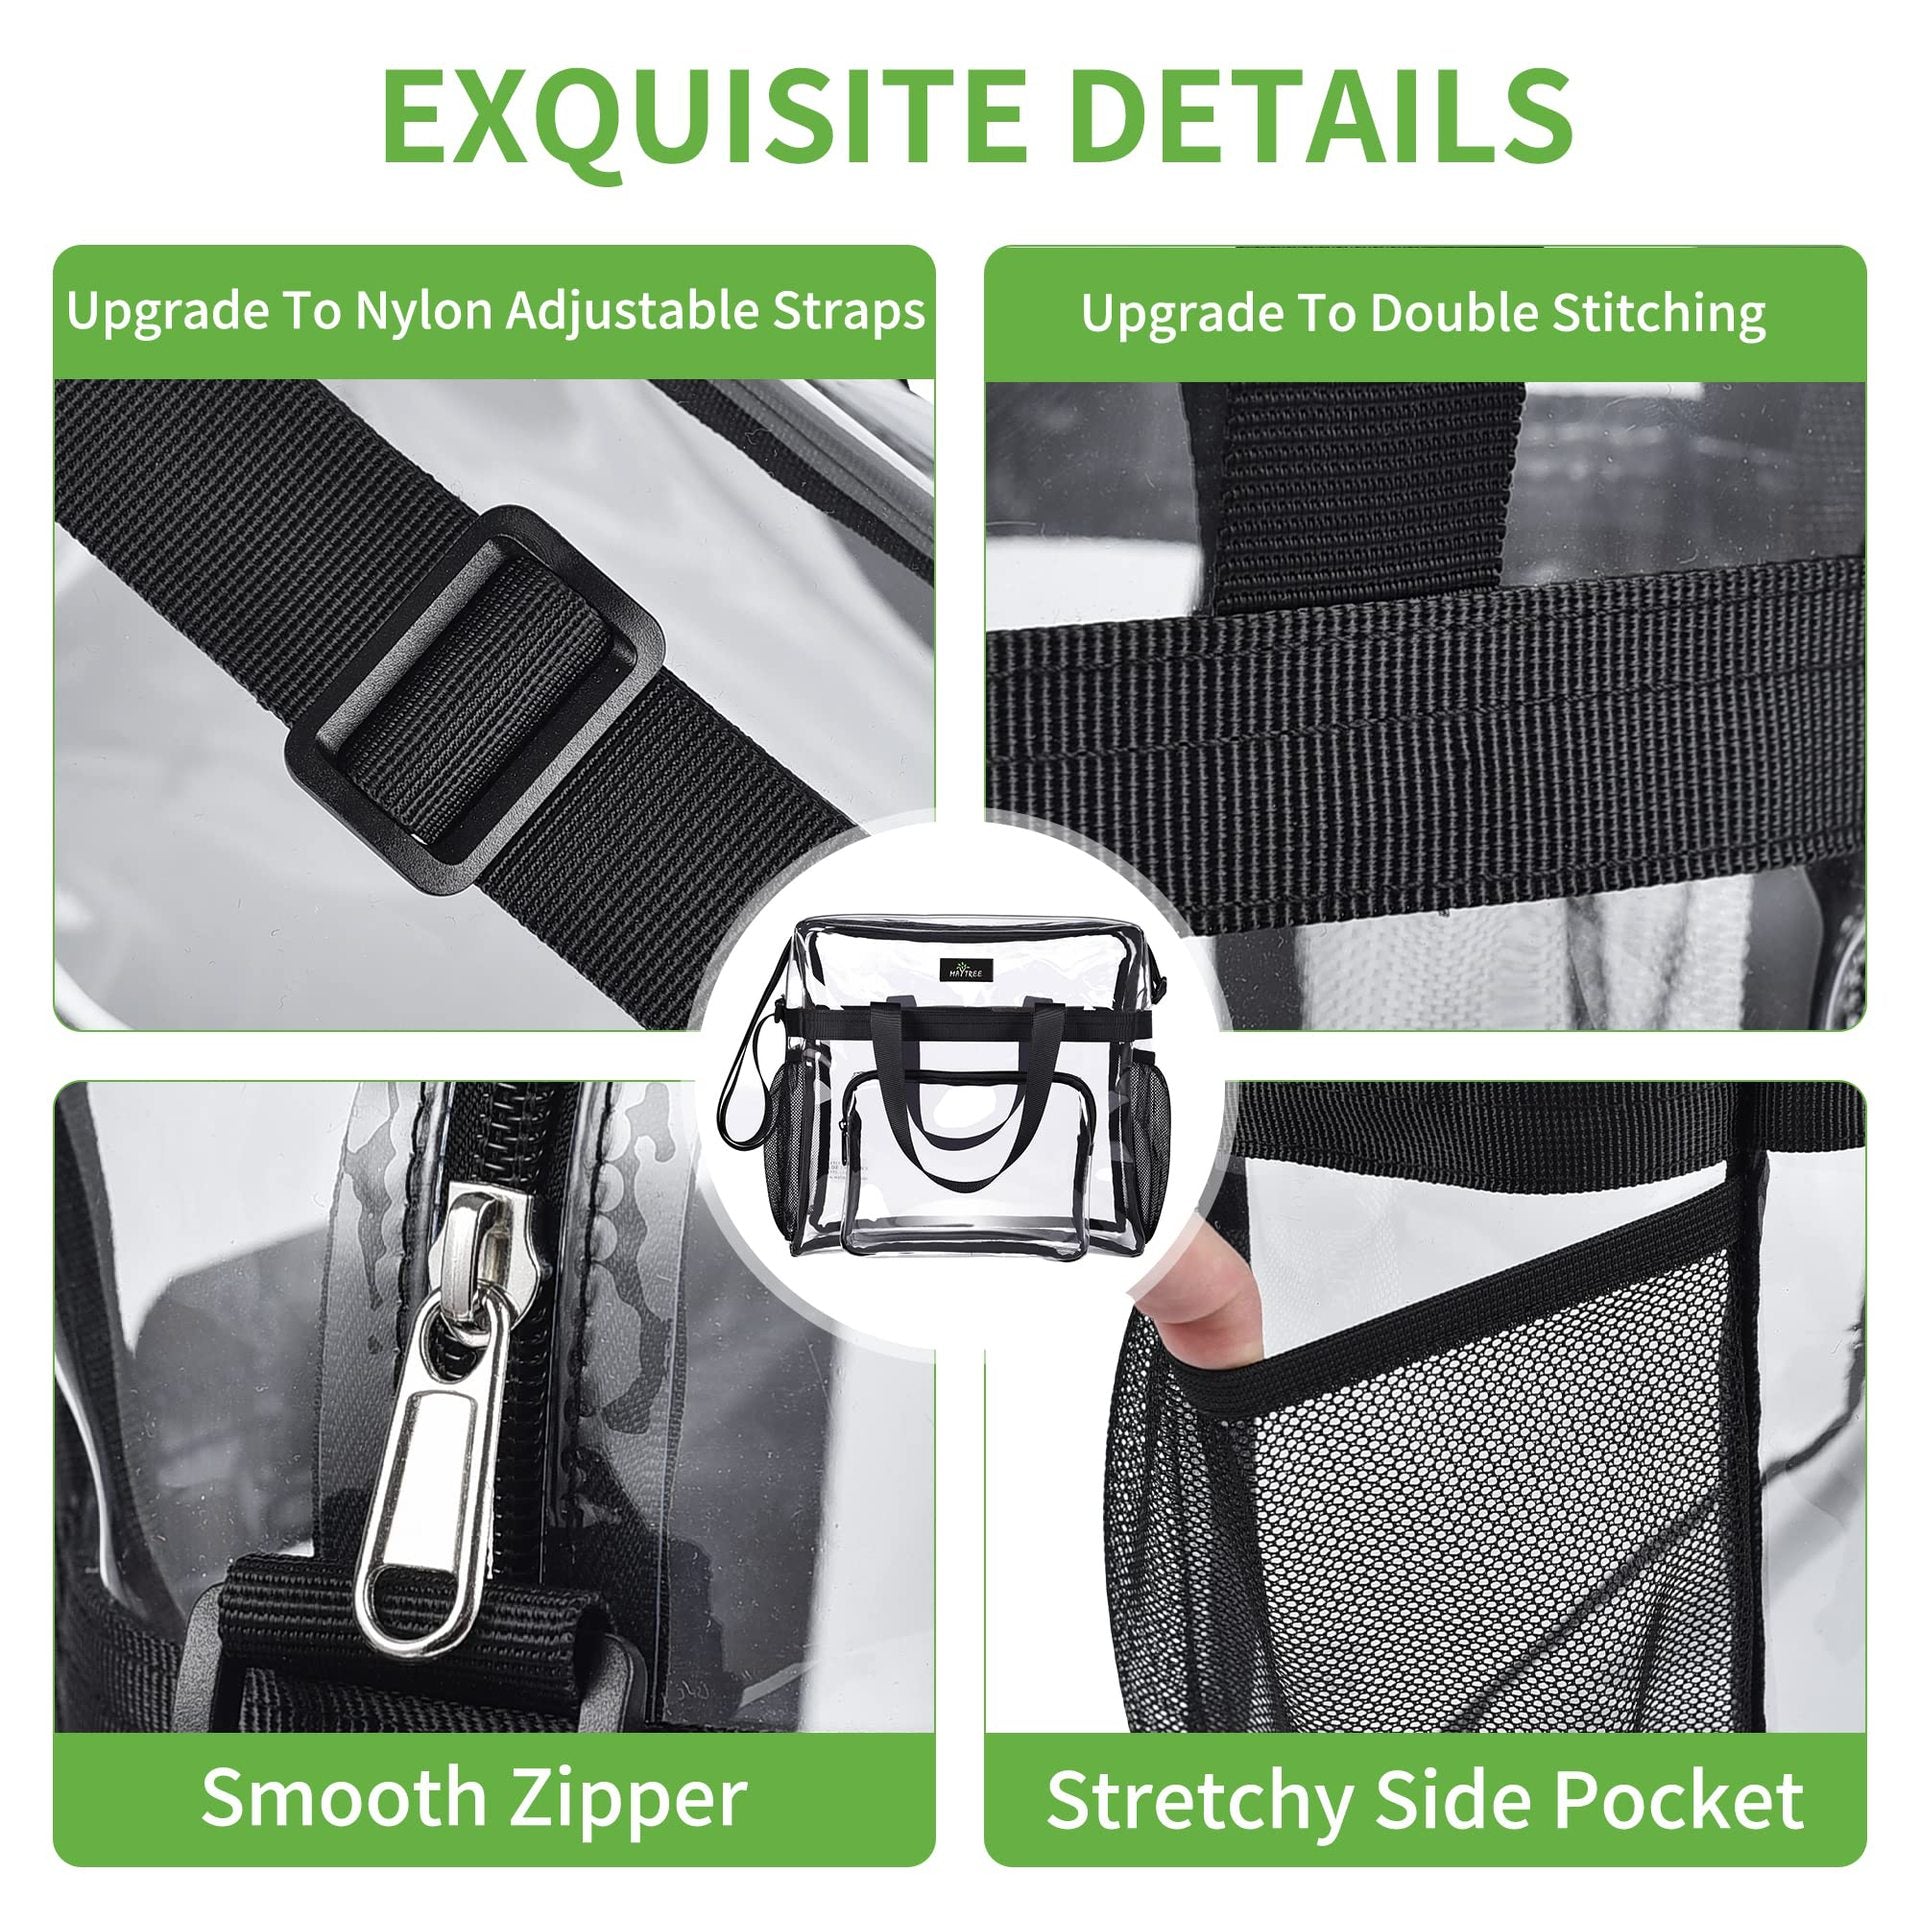 Customizable Transparent Shoulder Messenger Bag Travel Bag Shopping Bag Storage Bag Fashion Waterproof